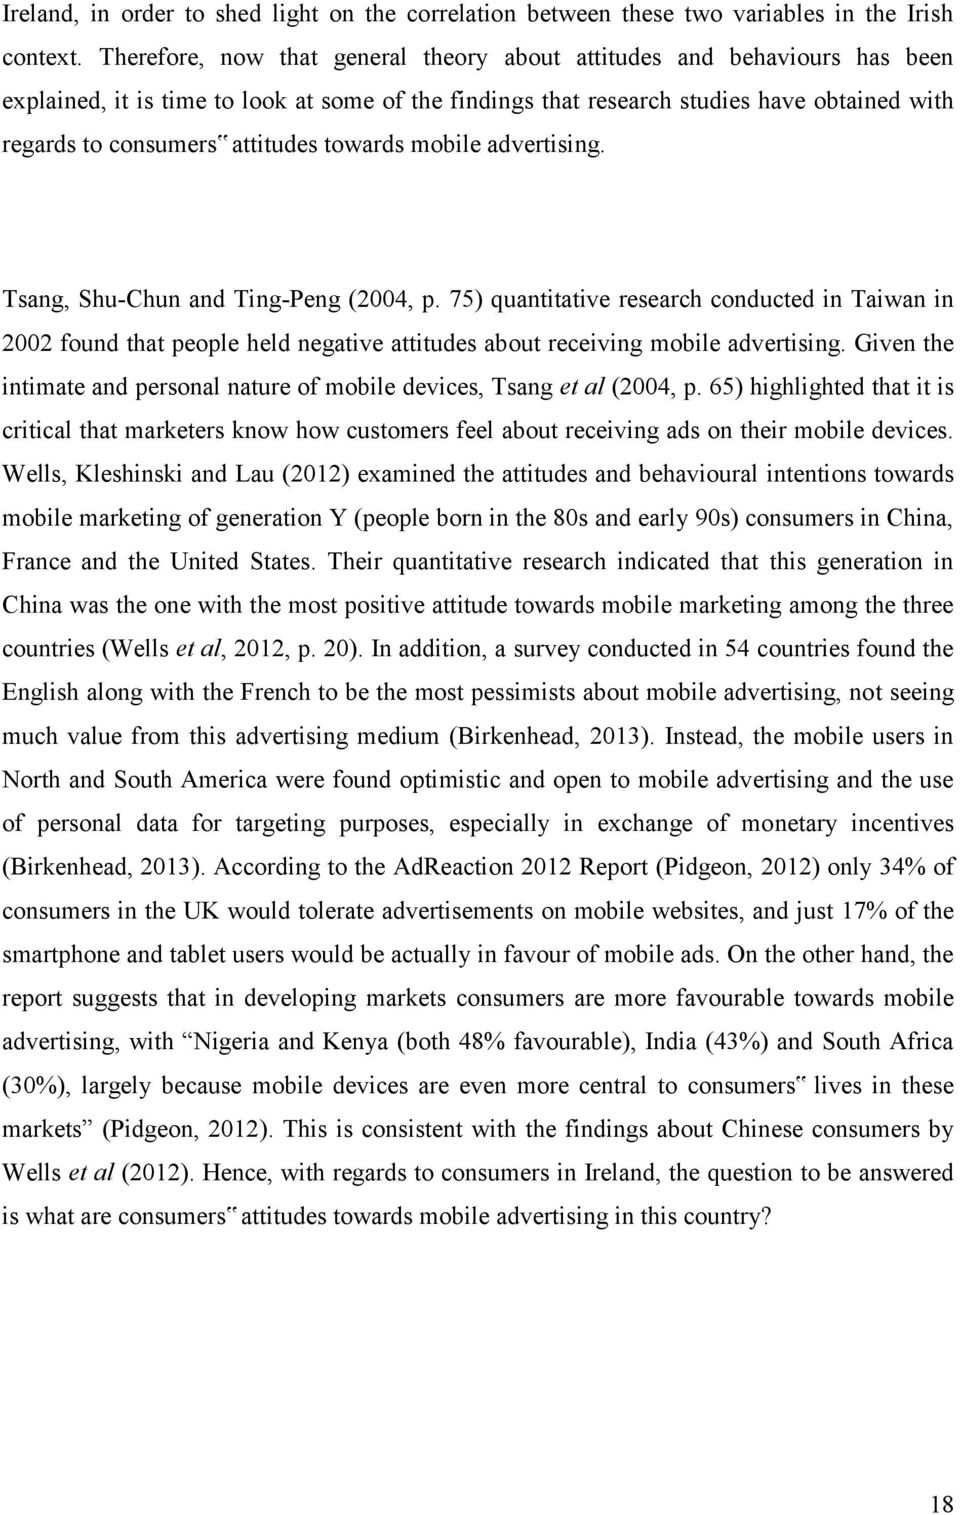 attitudes towards mobile advertising. Tsang, Shu-Chun and Ting-Peng (2004, p.